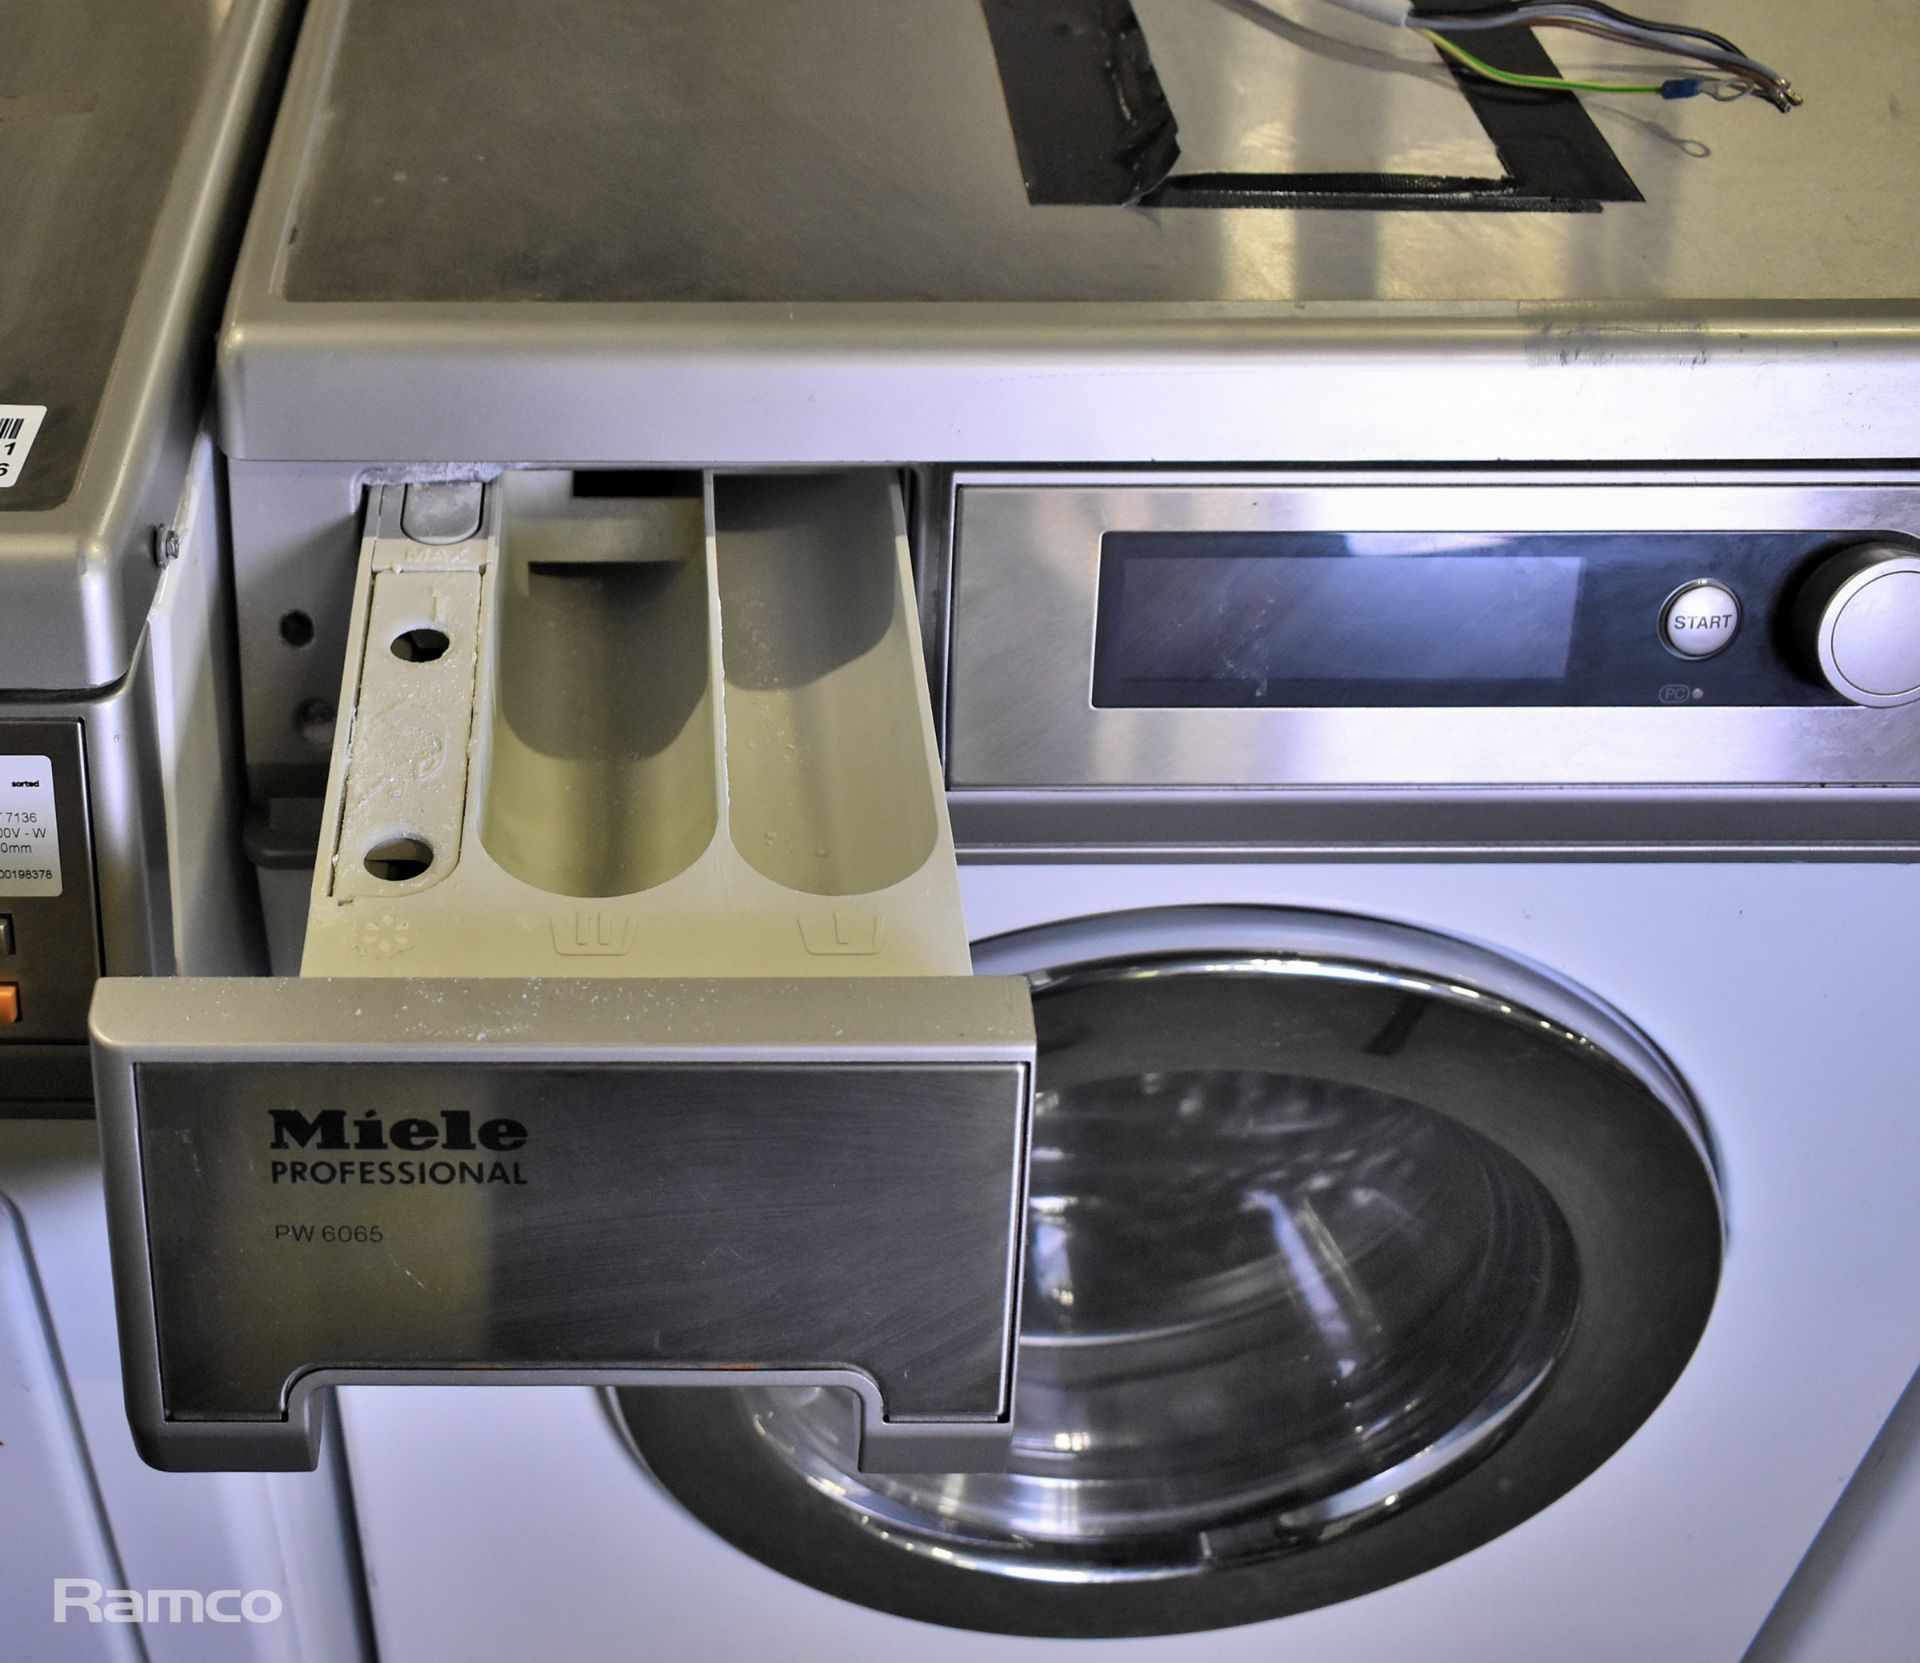 Miele Professional PW 6065 washing machine - 6.5kg capacity - W 595 x D 725 x H 850mm - Image 2 of 3